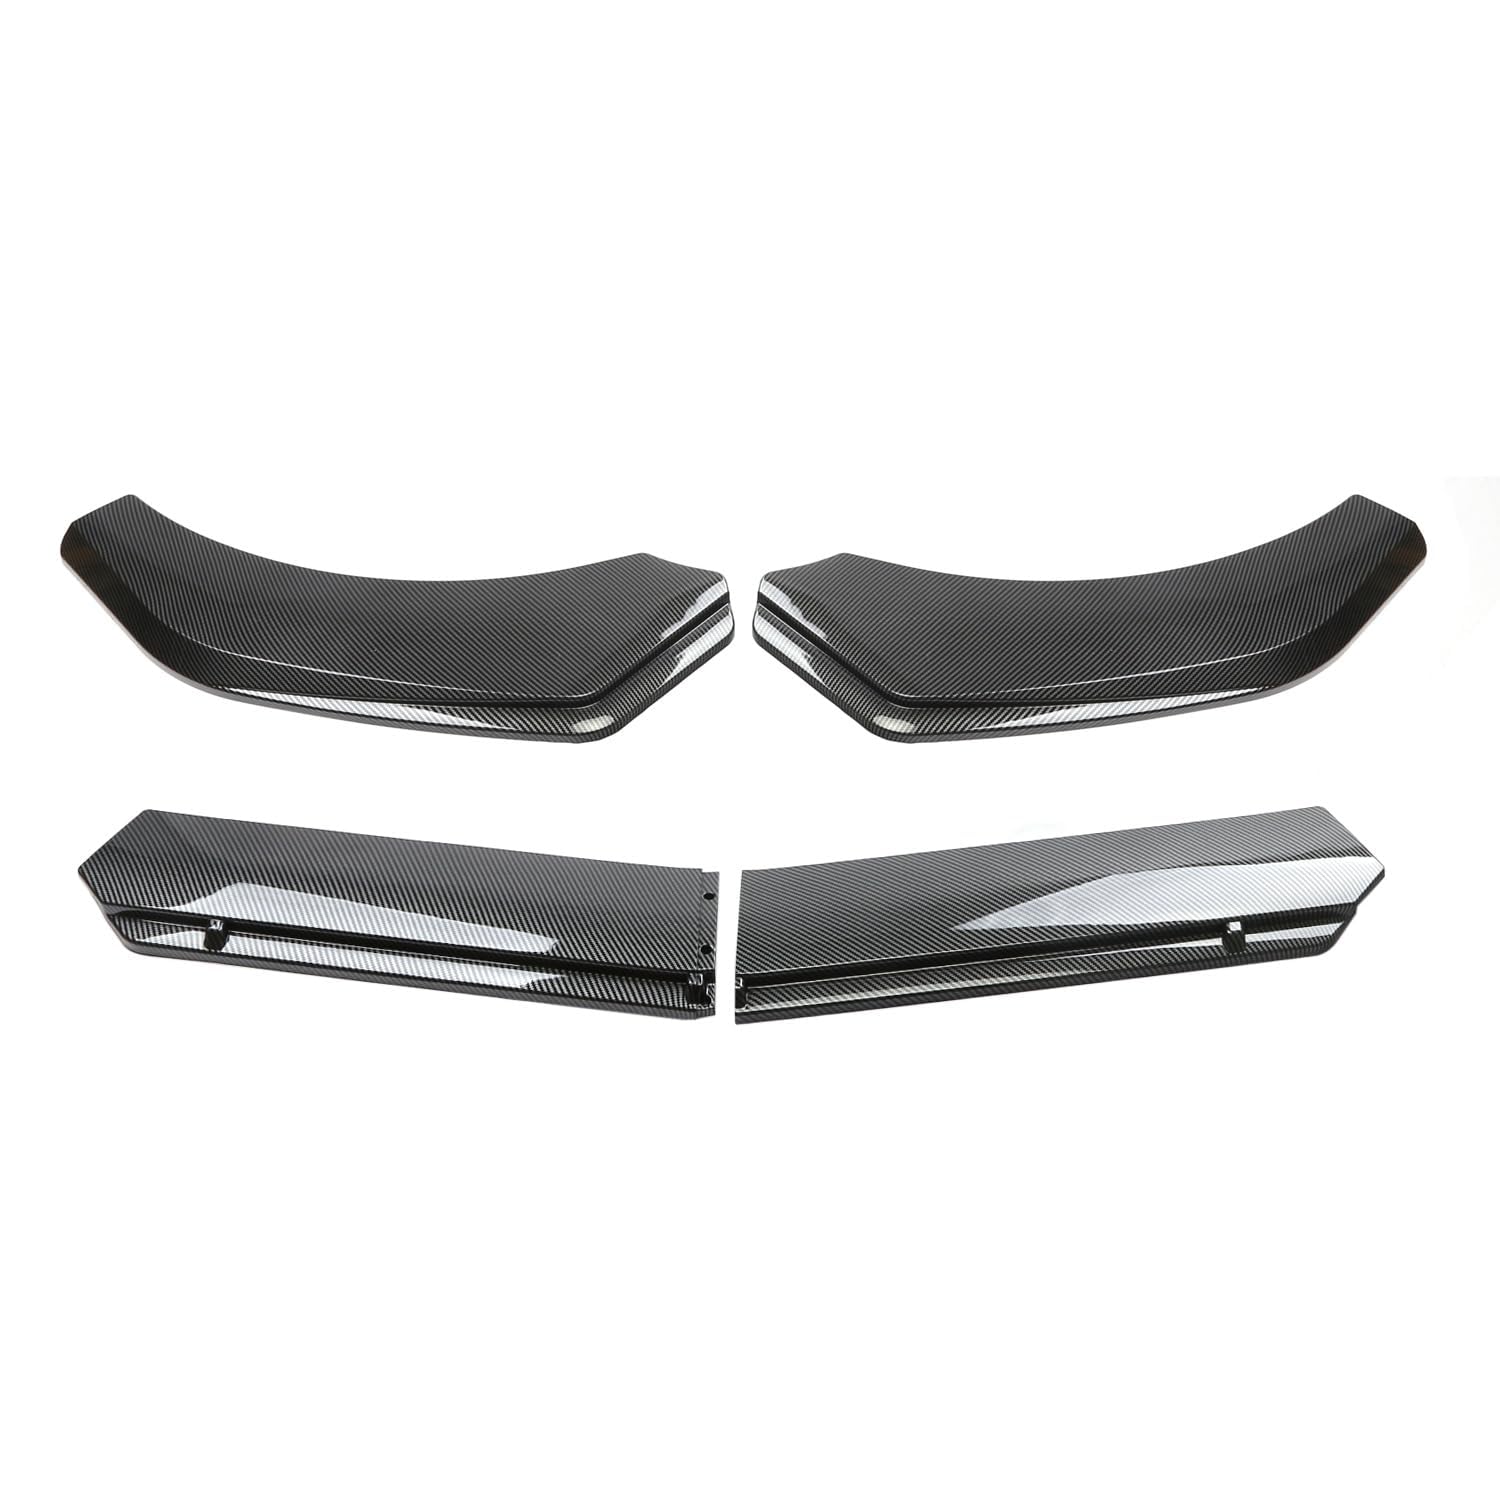 Auto Frontlippe Frontspoiler für Mercedes-Benz ML-Class (W166) 2012-2015, Frontstoßstange Splitter Lip Diffusor Frontspoiler Protector Kits,A-carbon fibre black von LCGAF